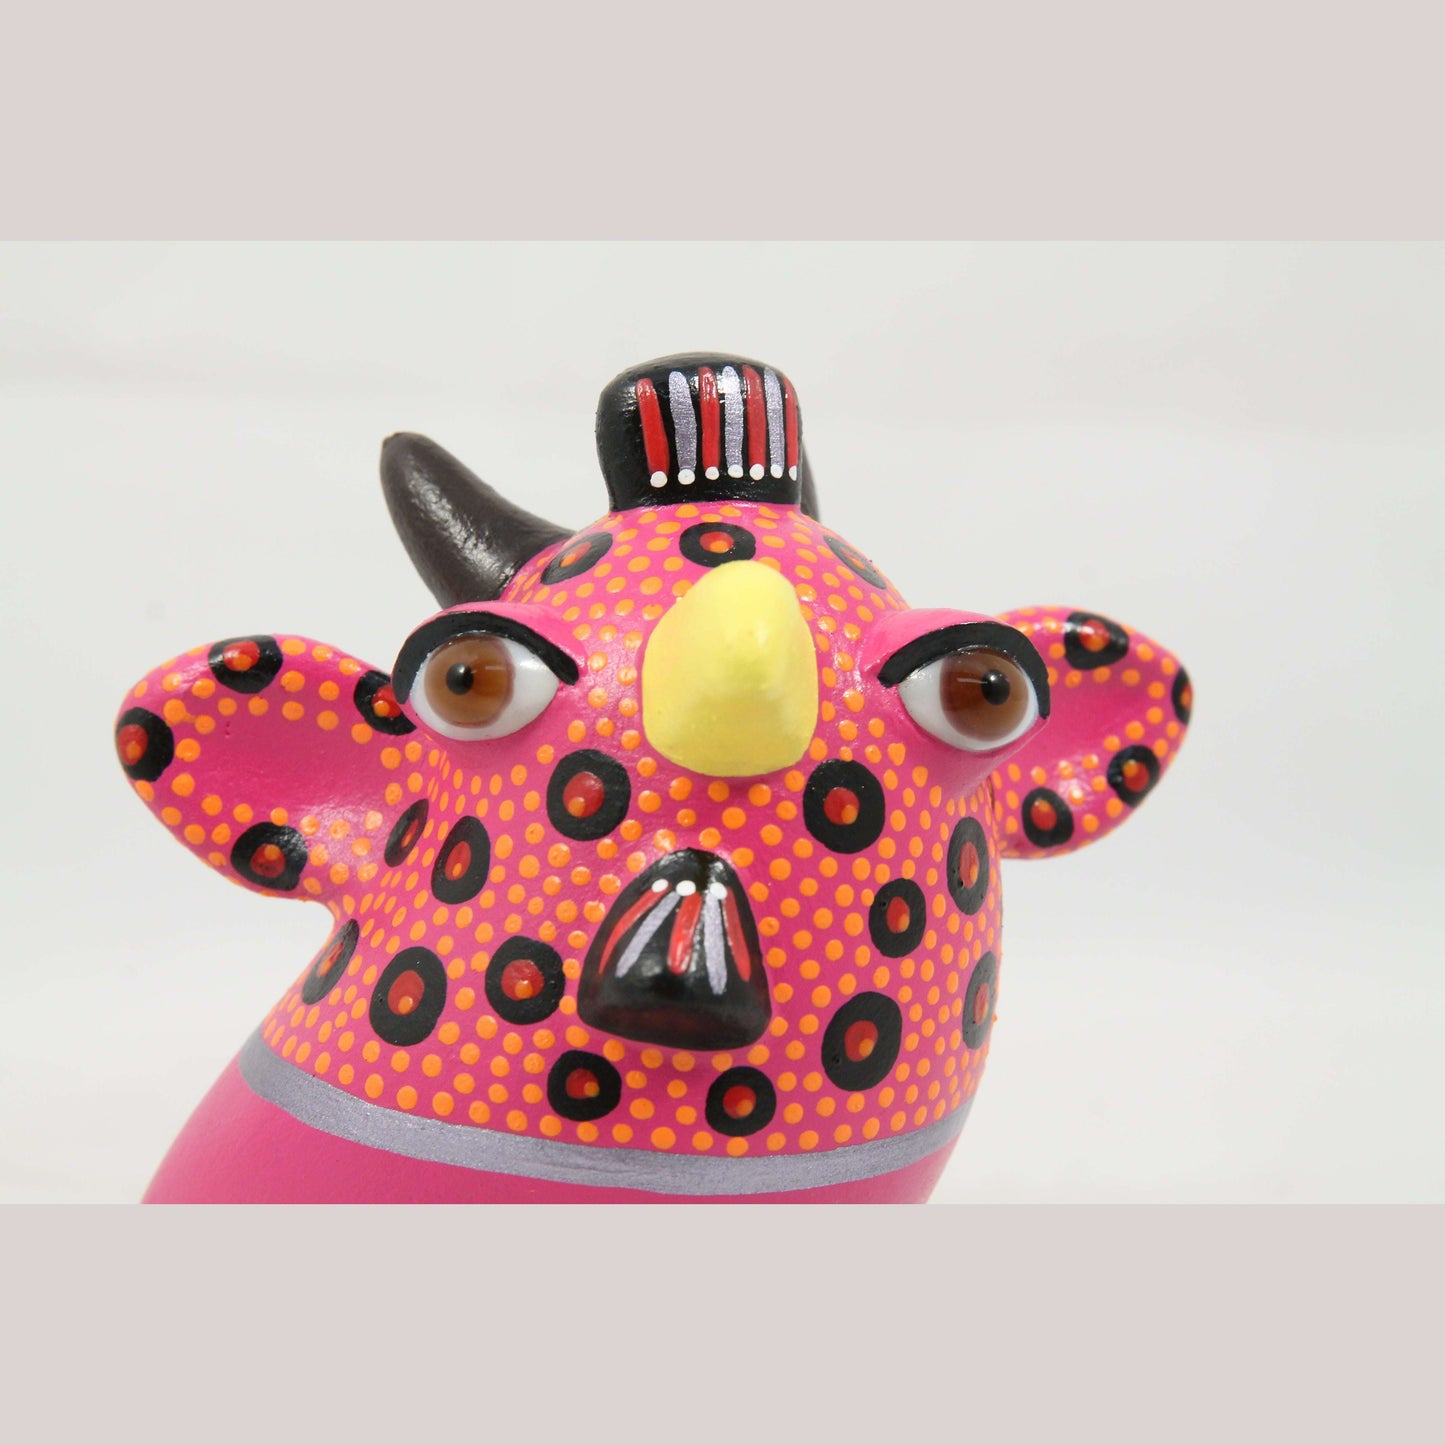 Fantasy Nagual Ceramic Bird Mexico Handmade Folk Art Sign Tonala Brown Eyes Pink